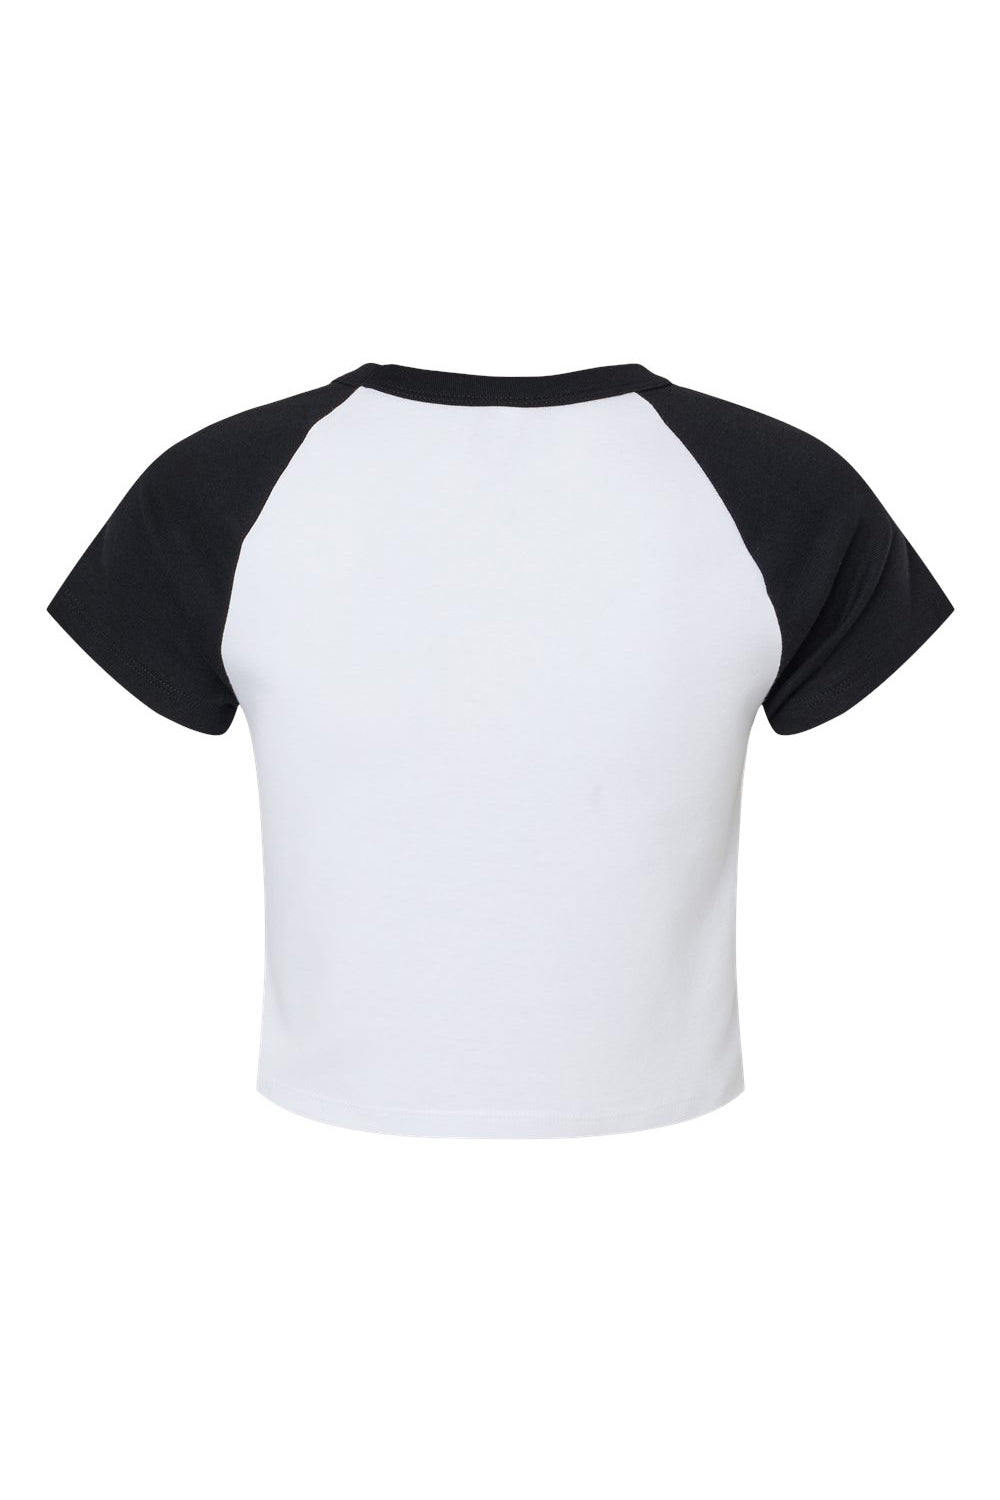 Bella + Canvas 1201 Womens Micro Ribbed Raglan Short Sleeve Crewneck Baby T-Shirt White/Black Flat Back